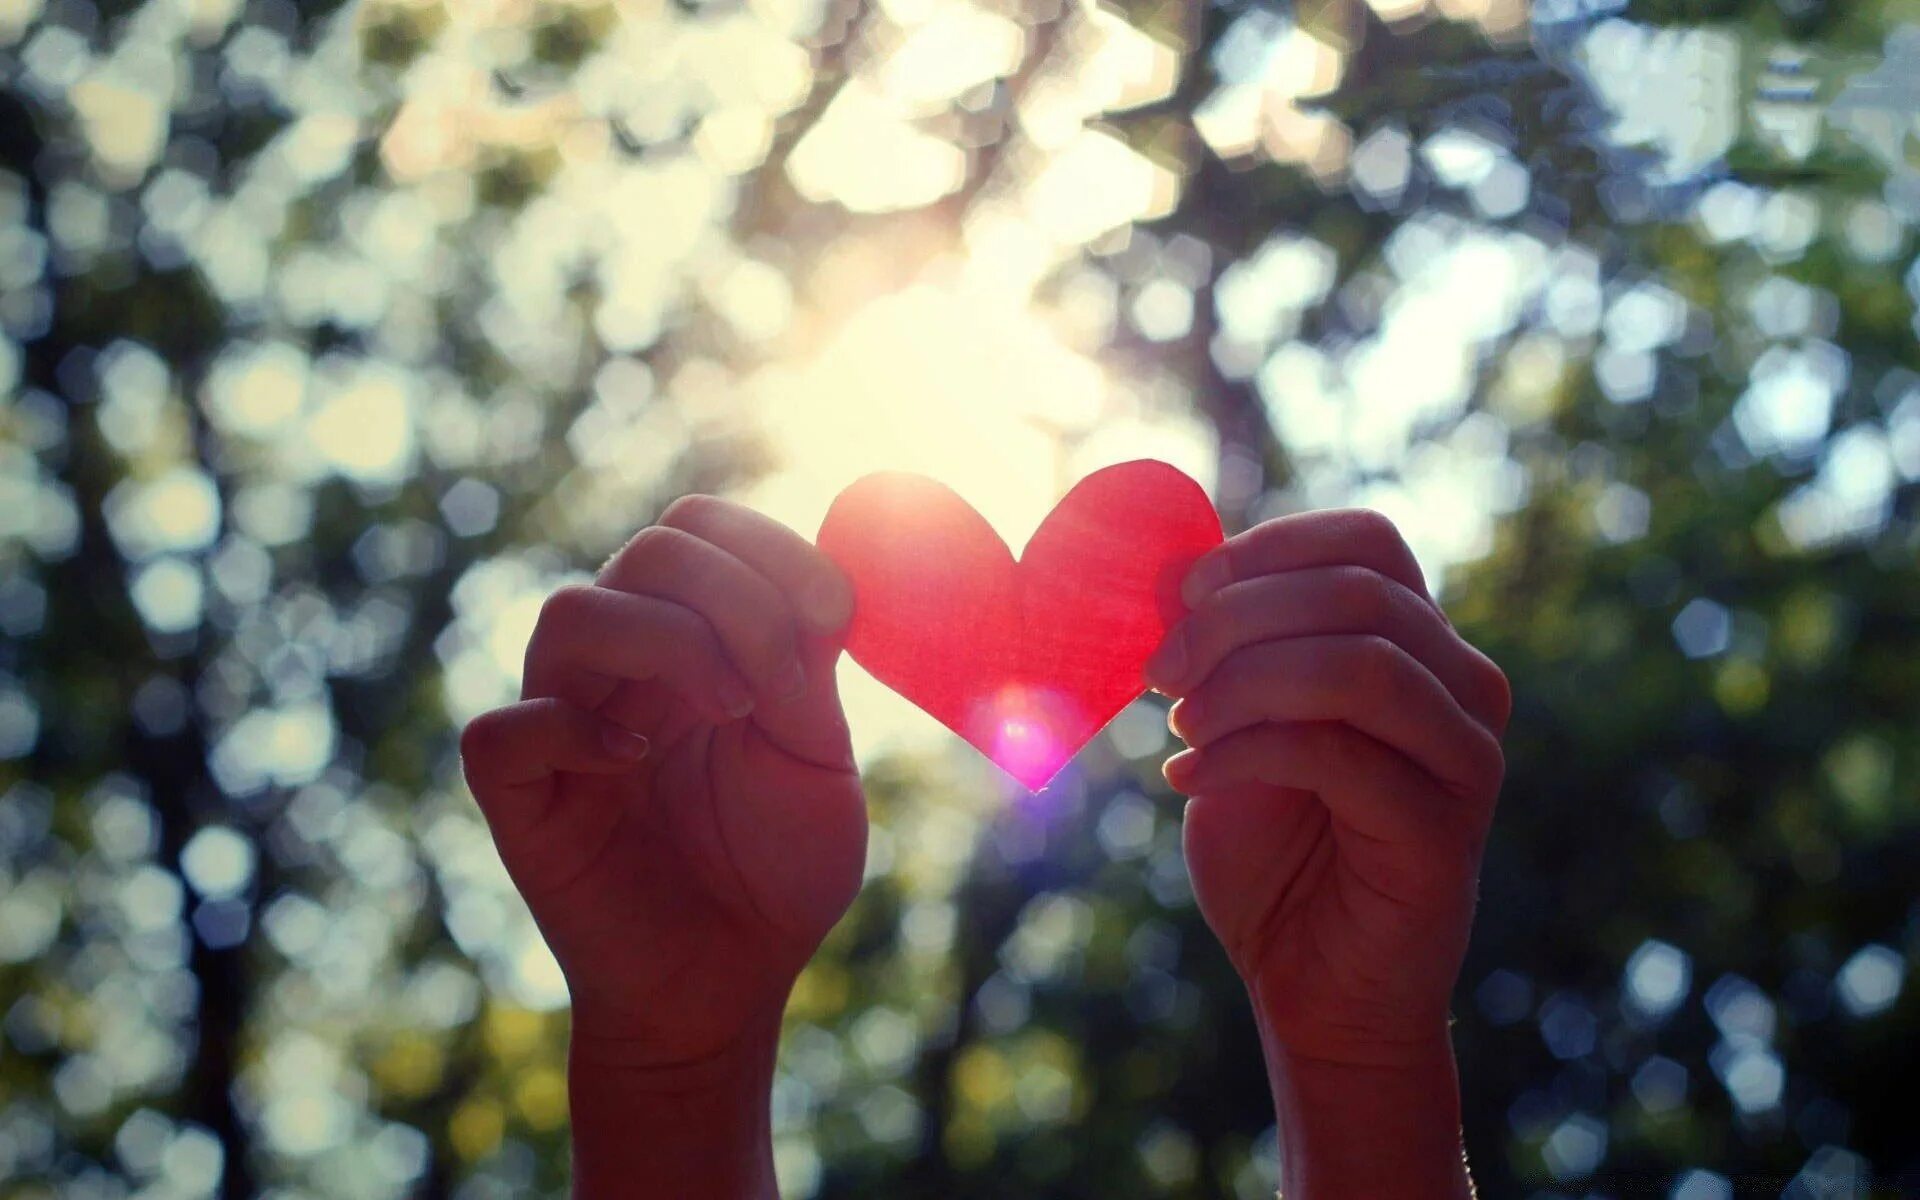 Открой свое сердце 1. Сердце в руках. Сердечко руками. Сеhlwt d Hef[. Красивое сердце в руках.